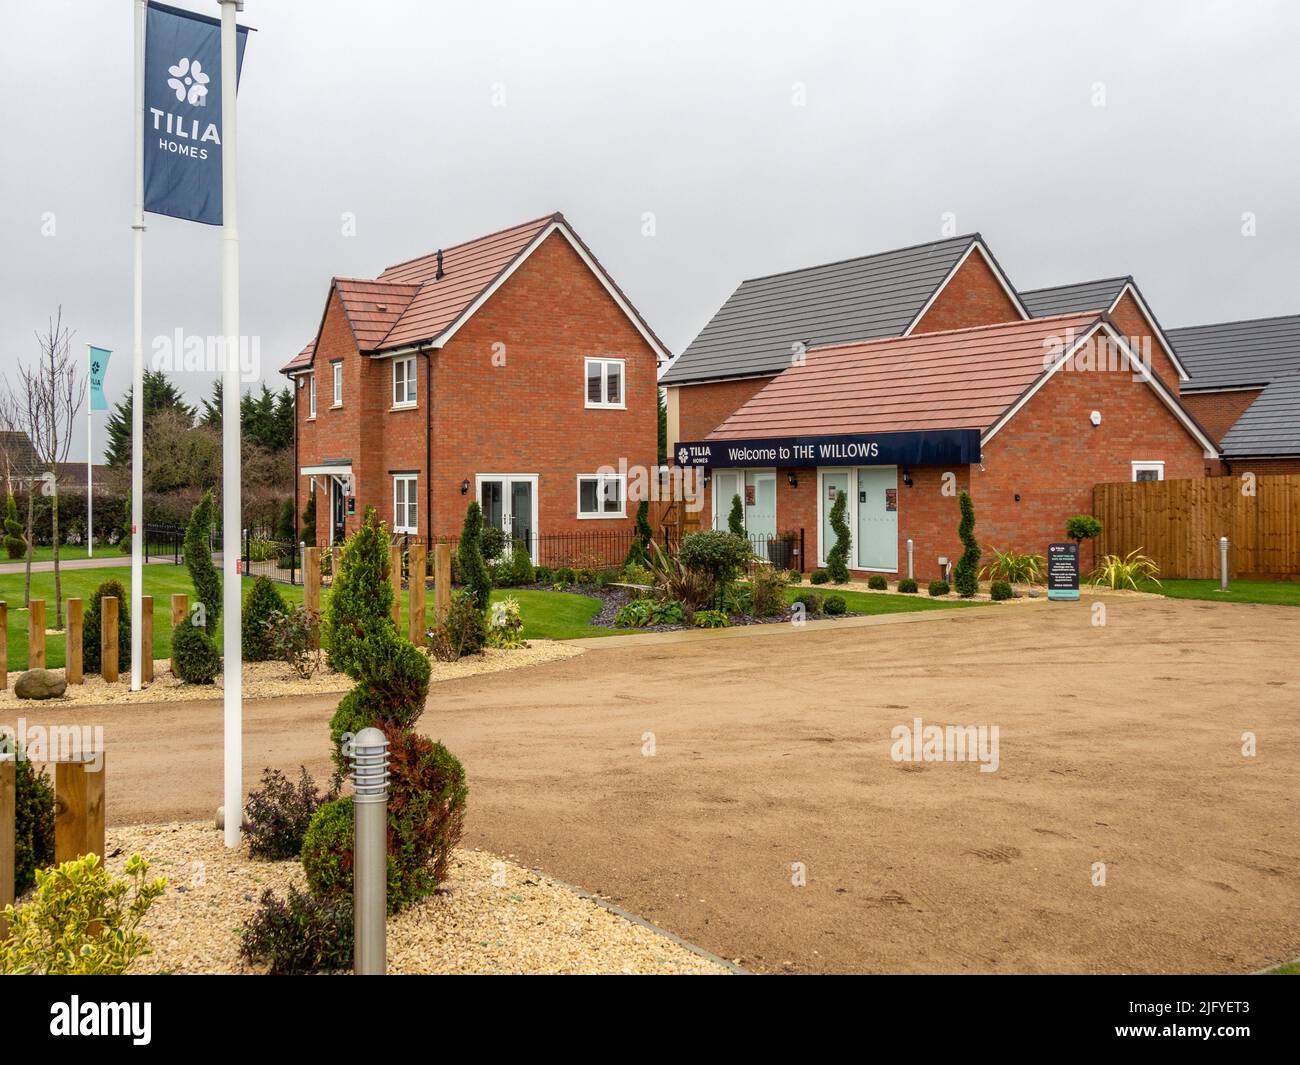 Show homes for Tilia Homes on a new housing estate, Wootton, Northampton, UK Stock Photo